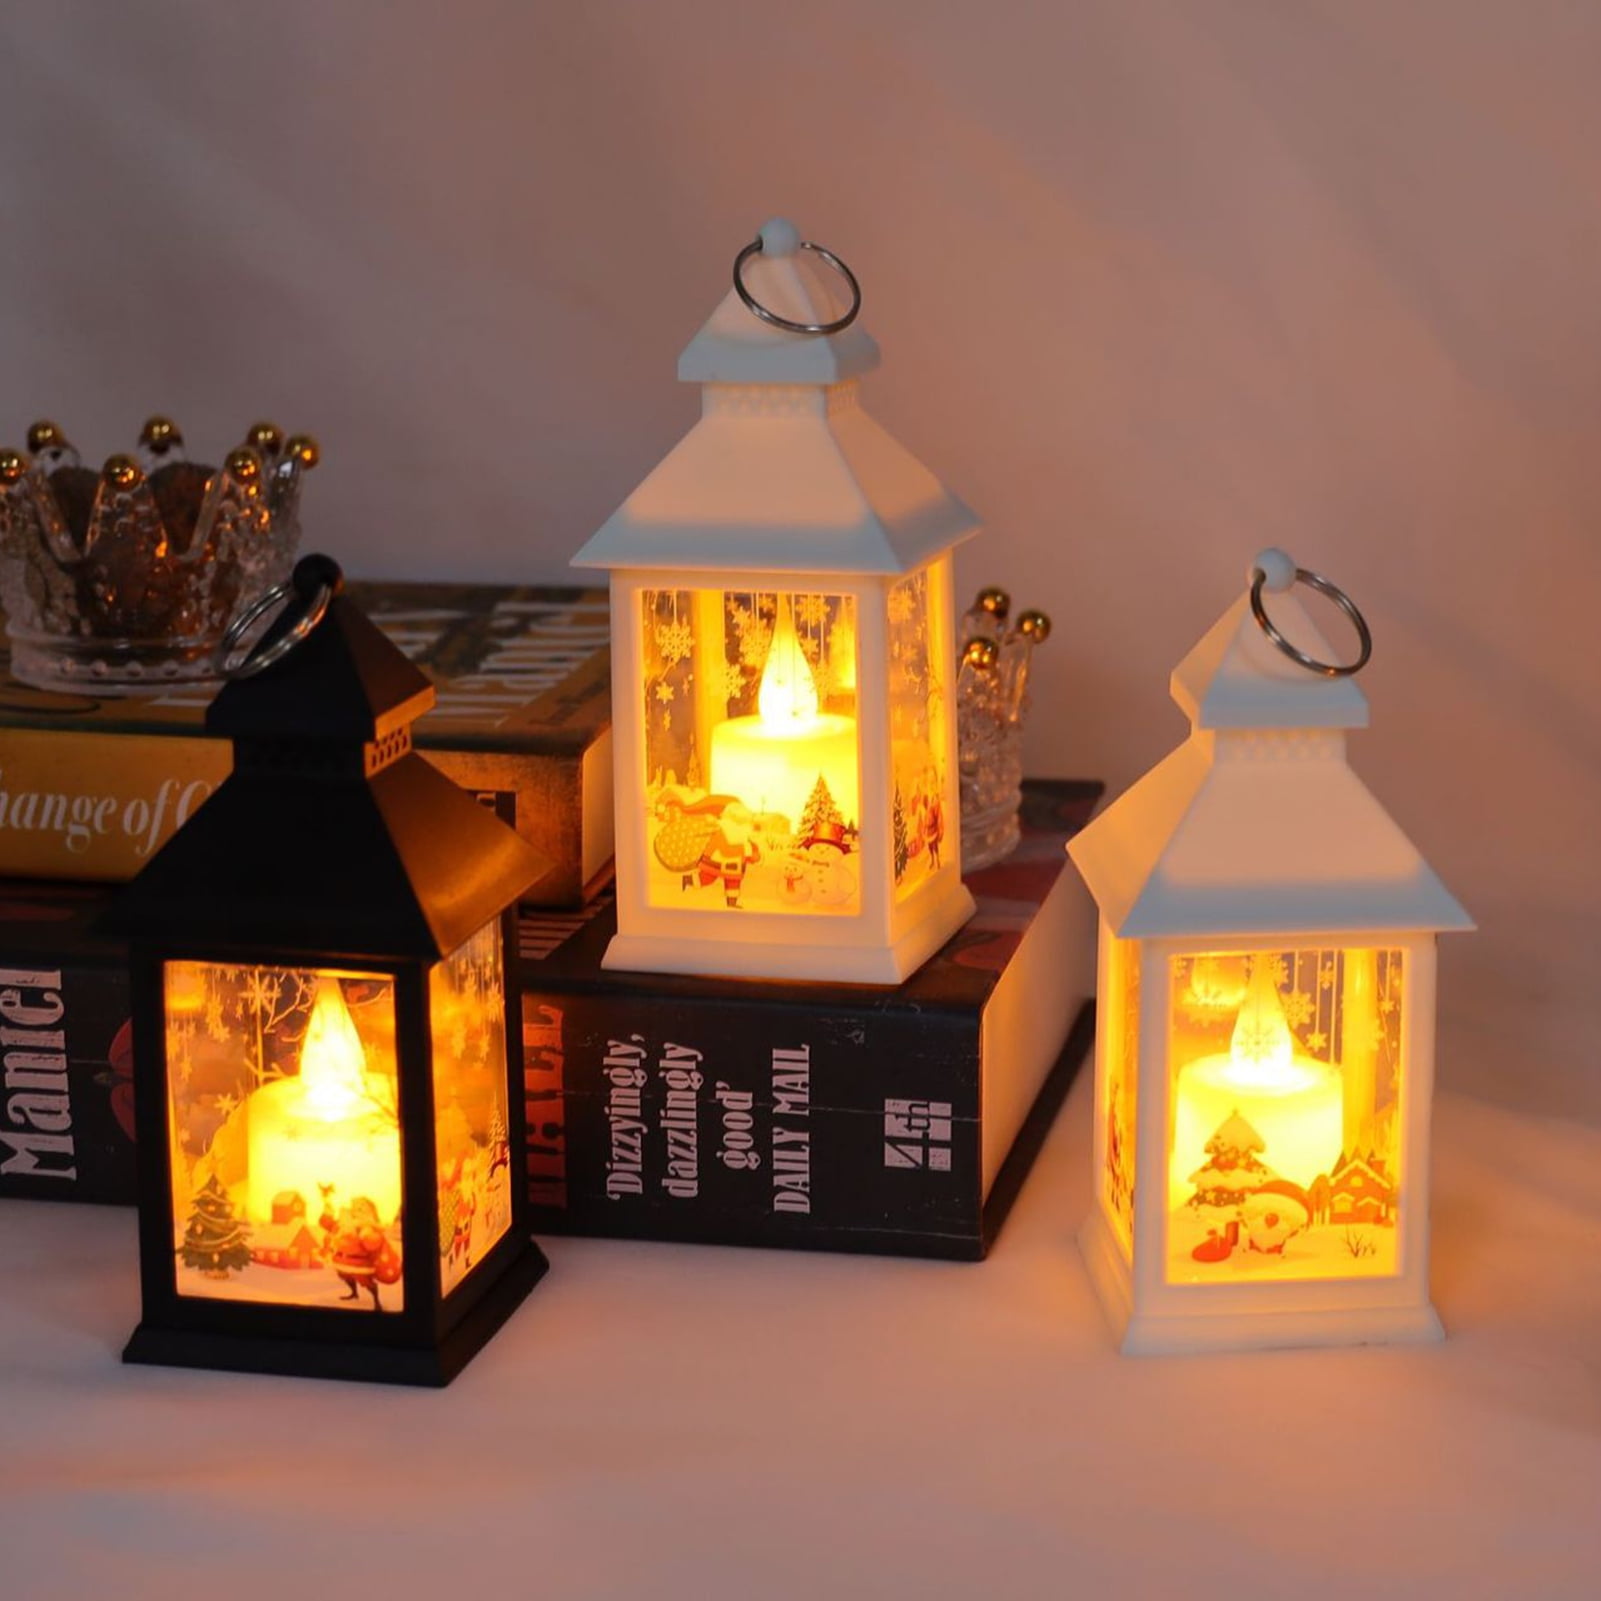 Protoiya Vintage Candle LanternLantern with FlickerinED,Battery Includg Led,Decorative Hanging Lantern,Christmas Decorative Lantern,Indoor Candle